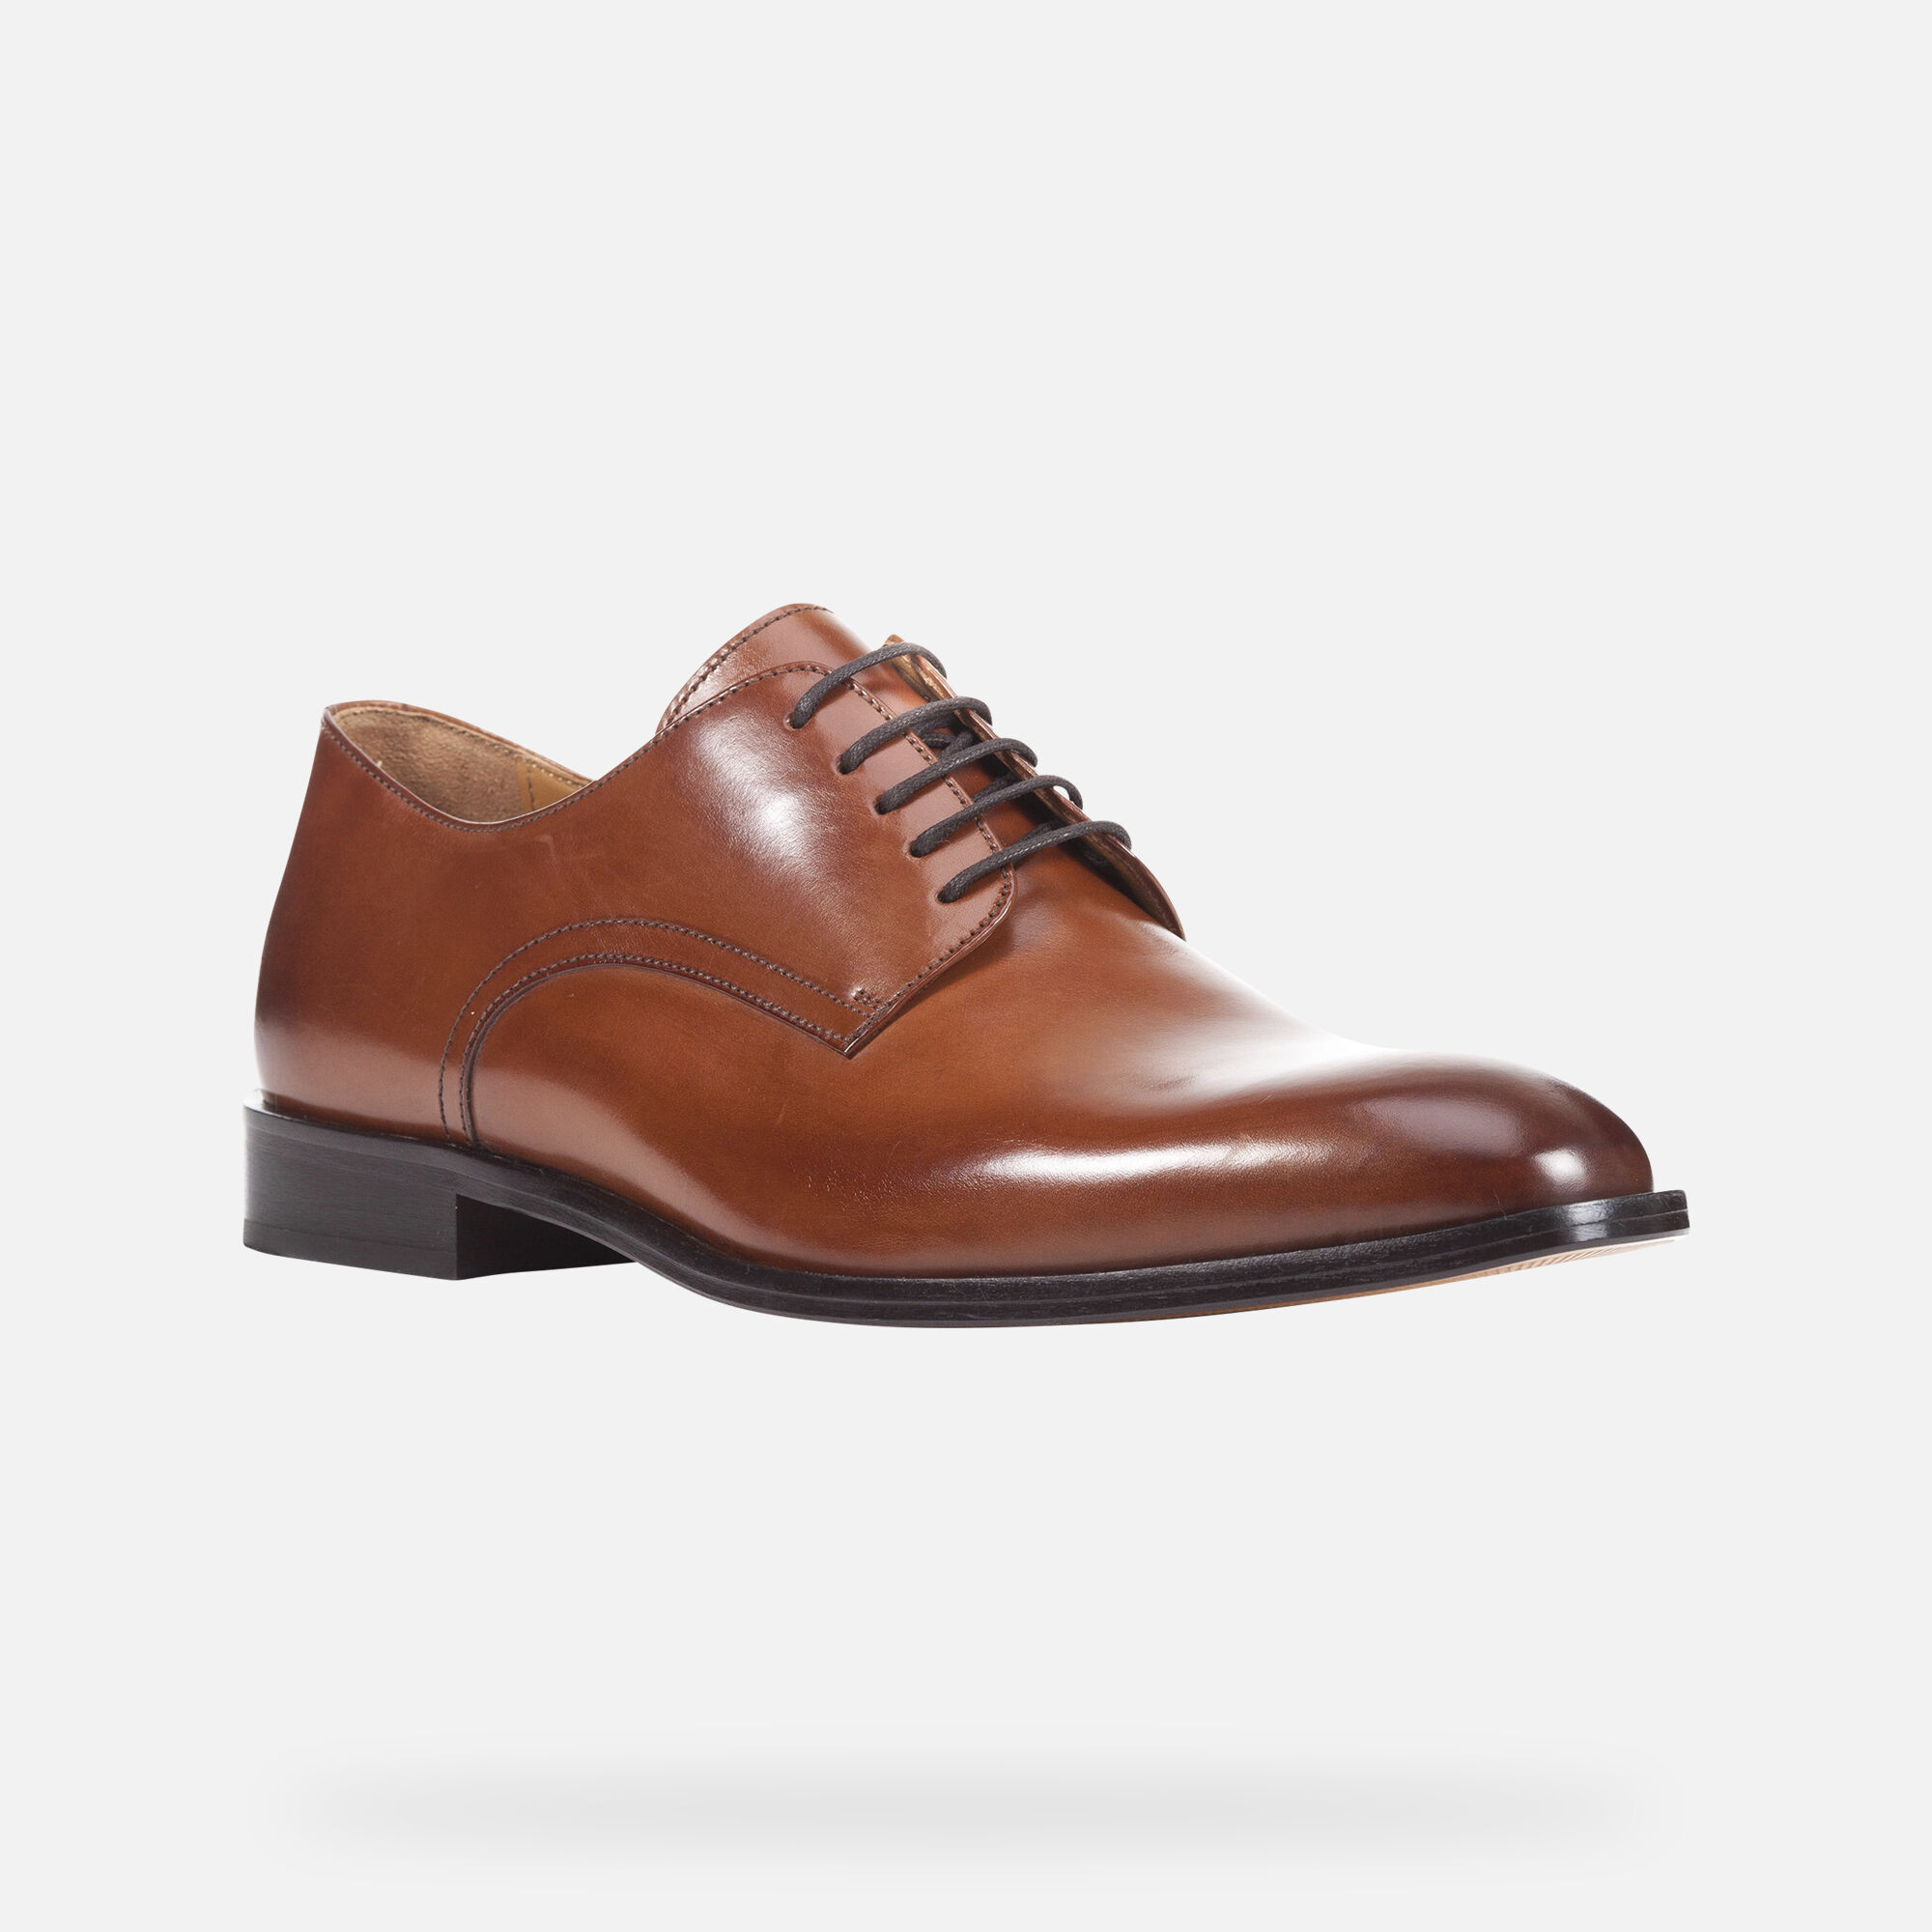 Geox SAYMORE Man: Cognac Shoes | Geox SS20